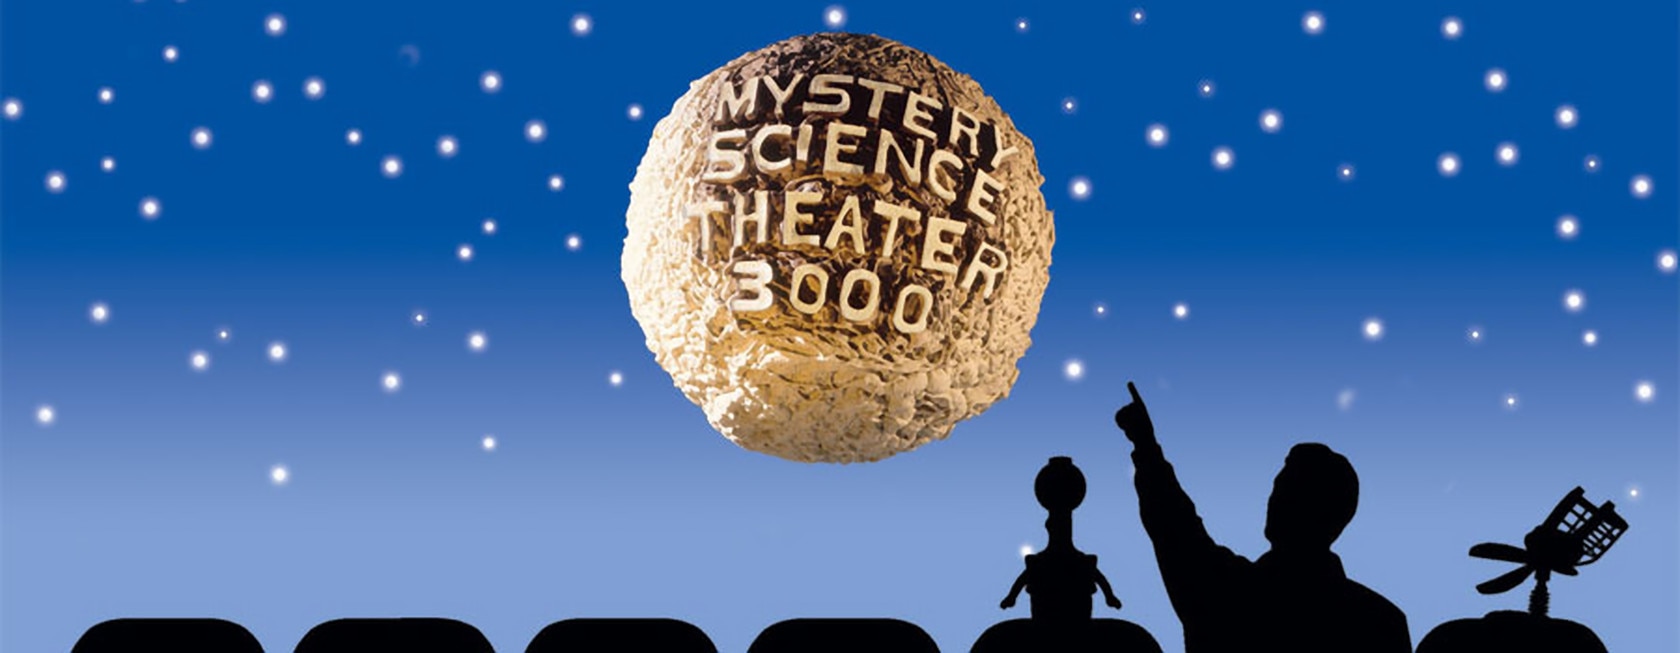 mystery-science-theater-3000.jpg